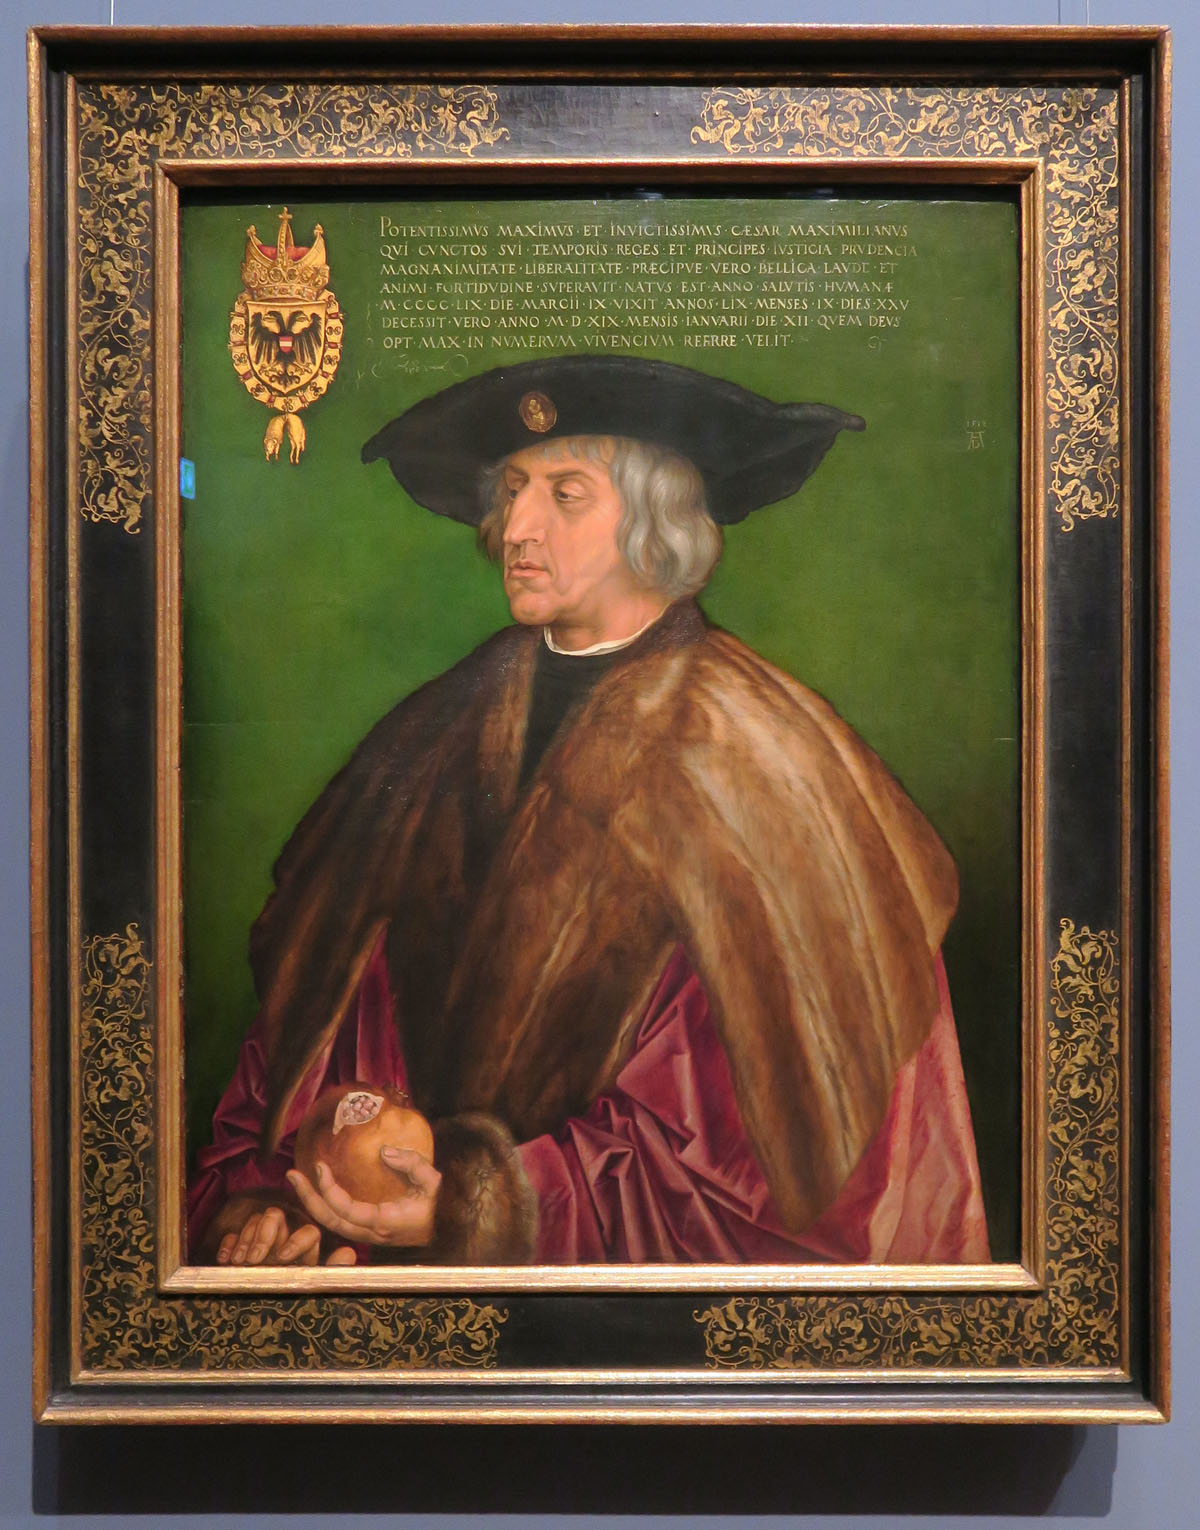 Portrait of Emperor Maximilian I by Albrecht Dürer